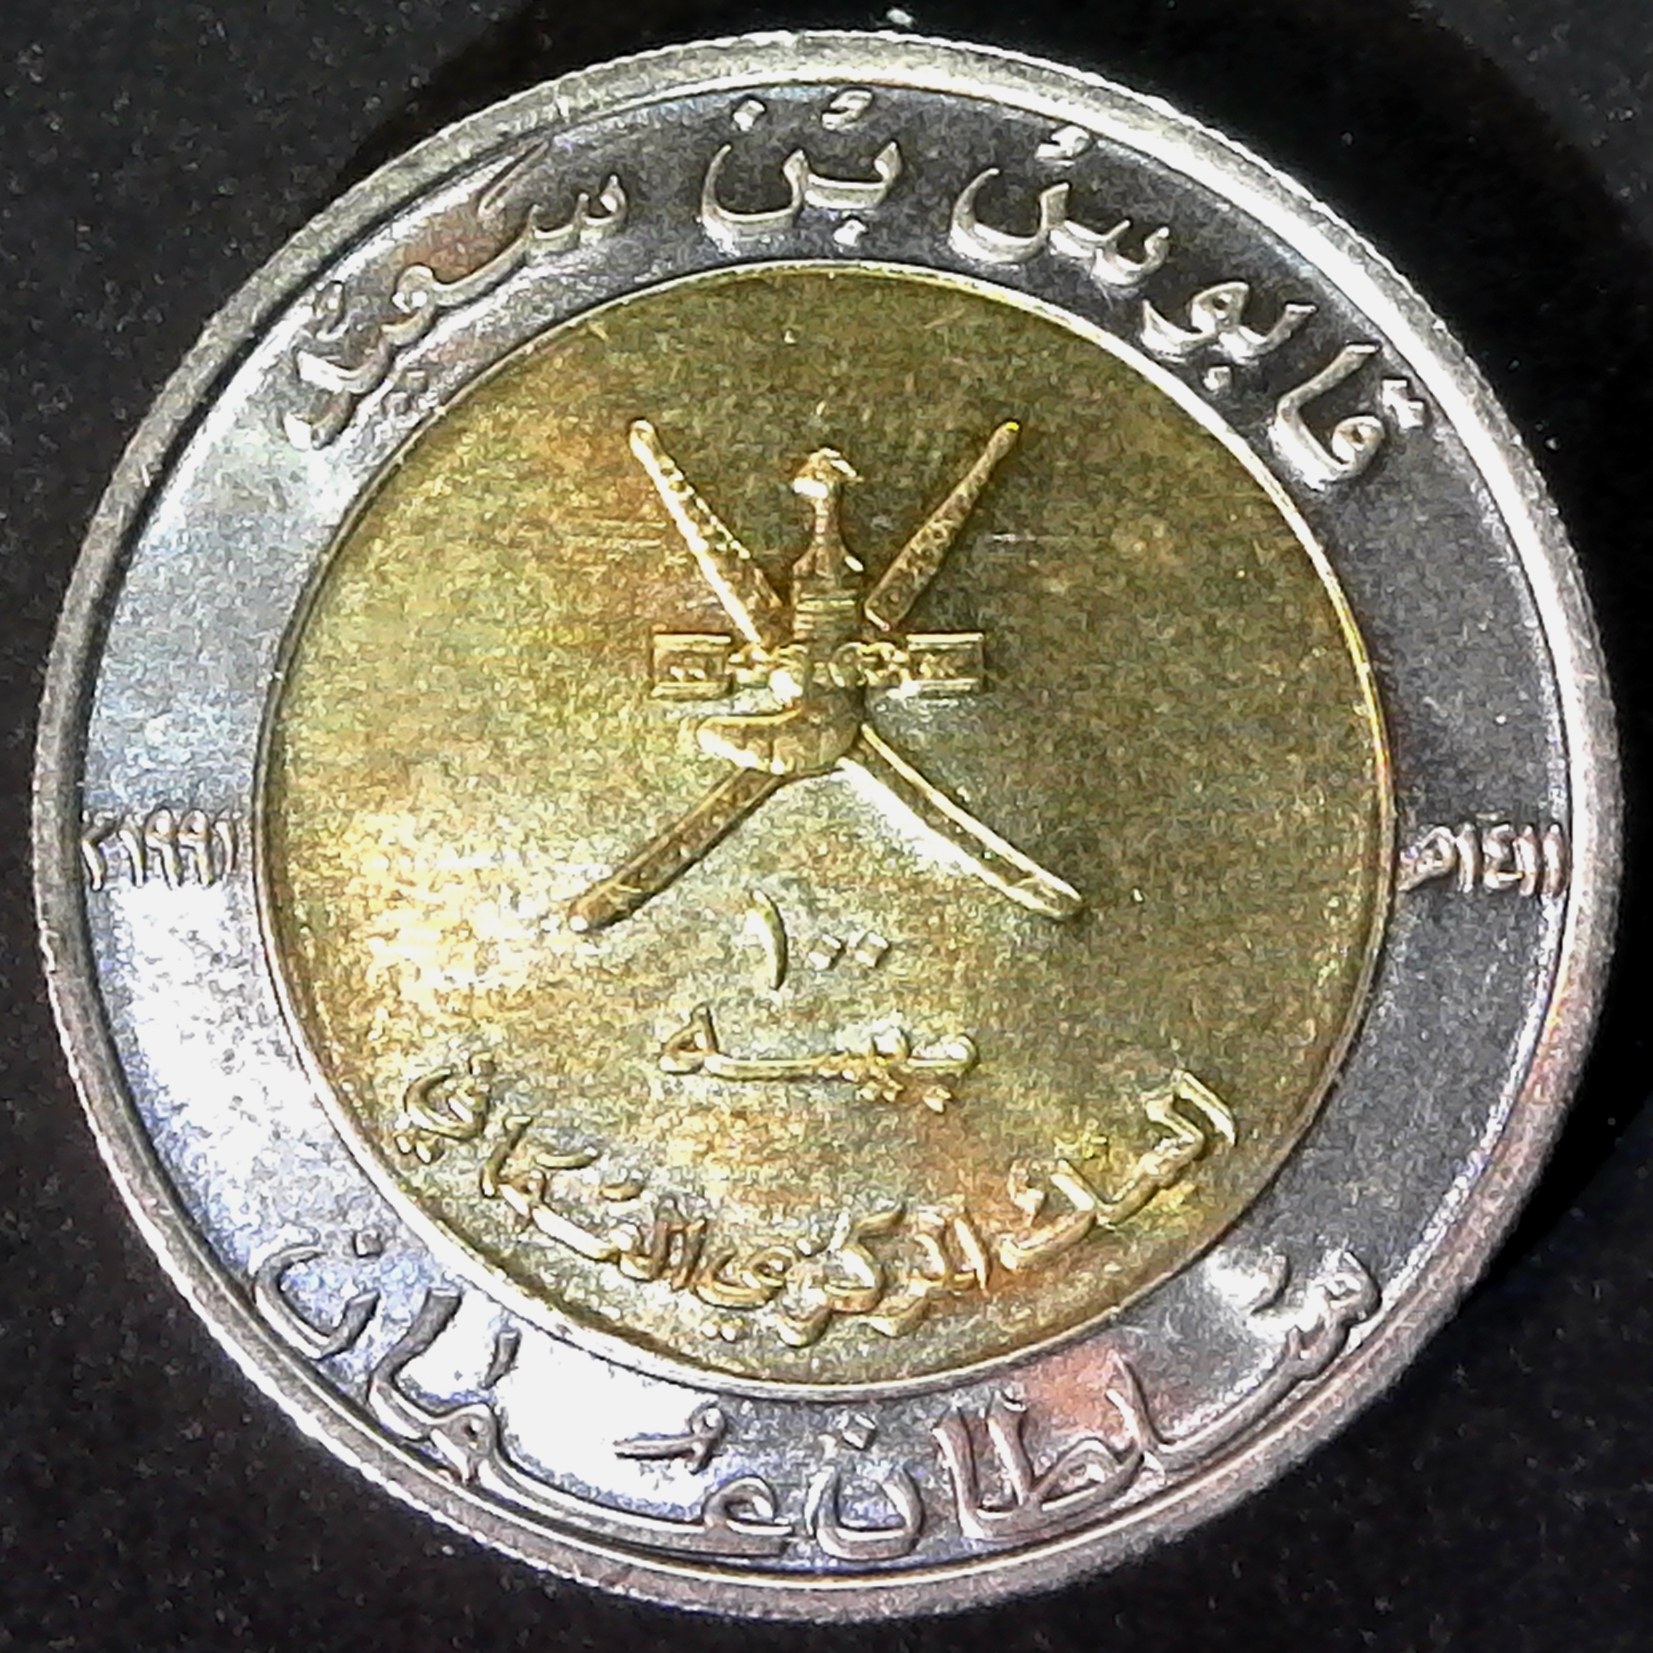 Oman 100 Baisa 1990 obv.jpg